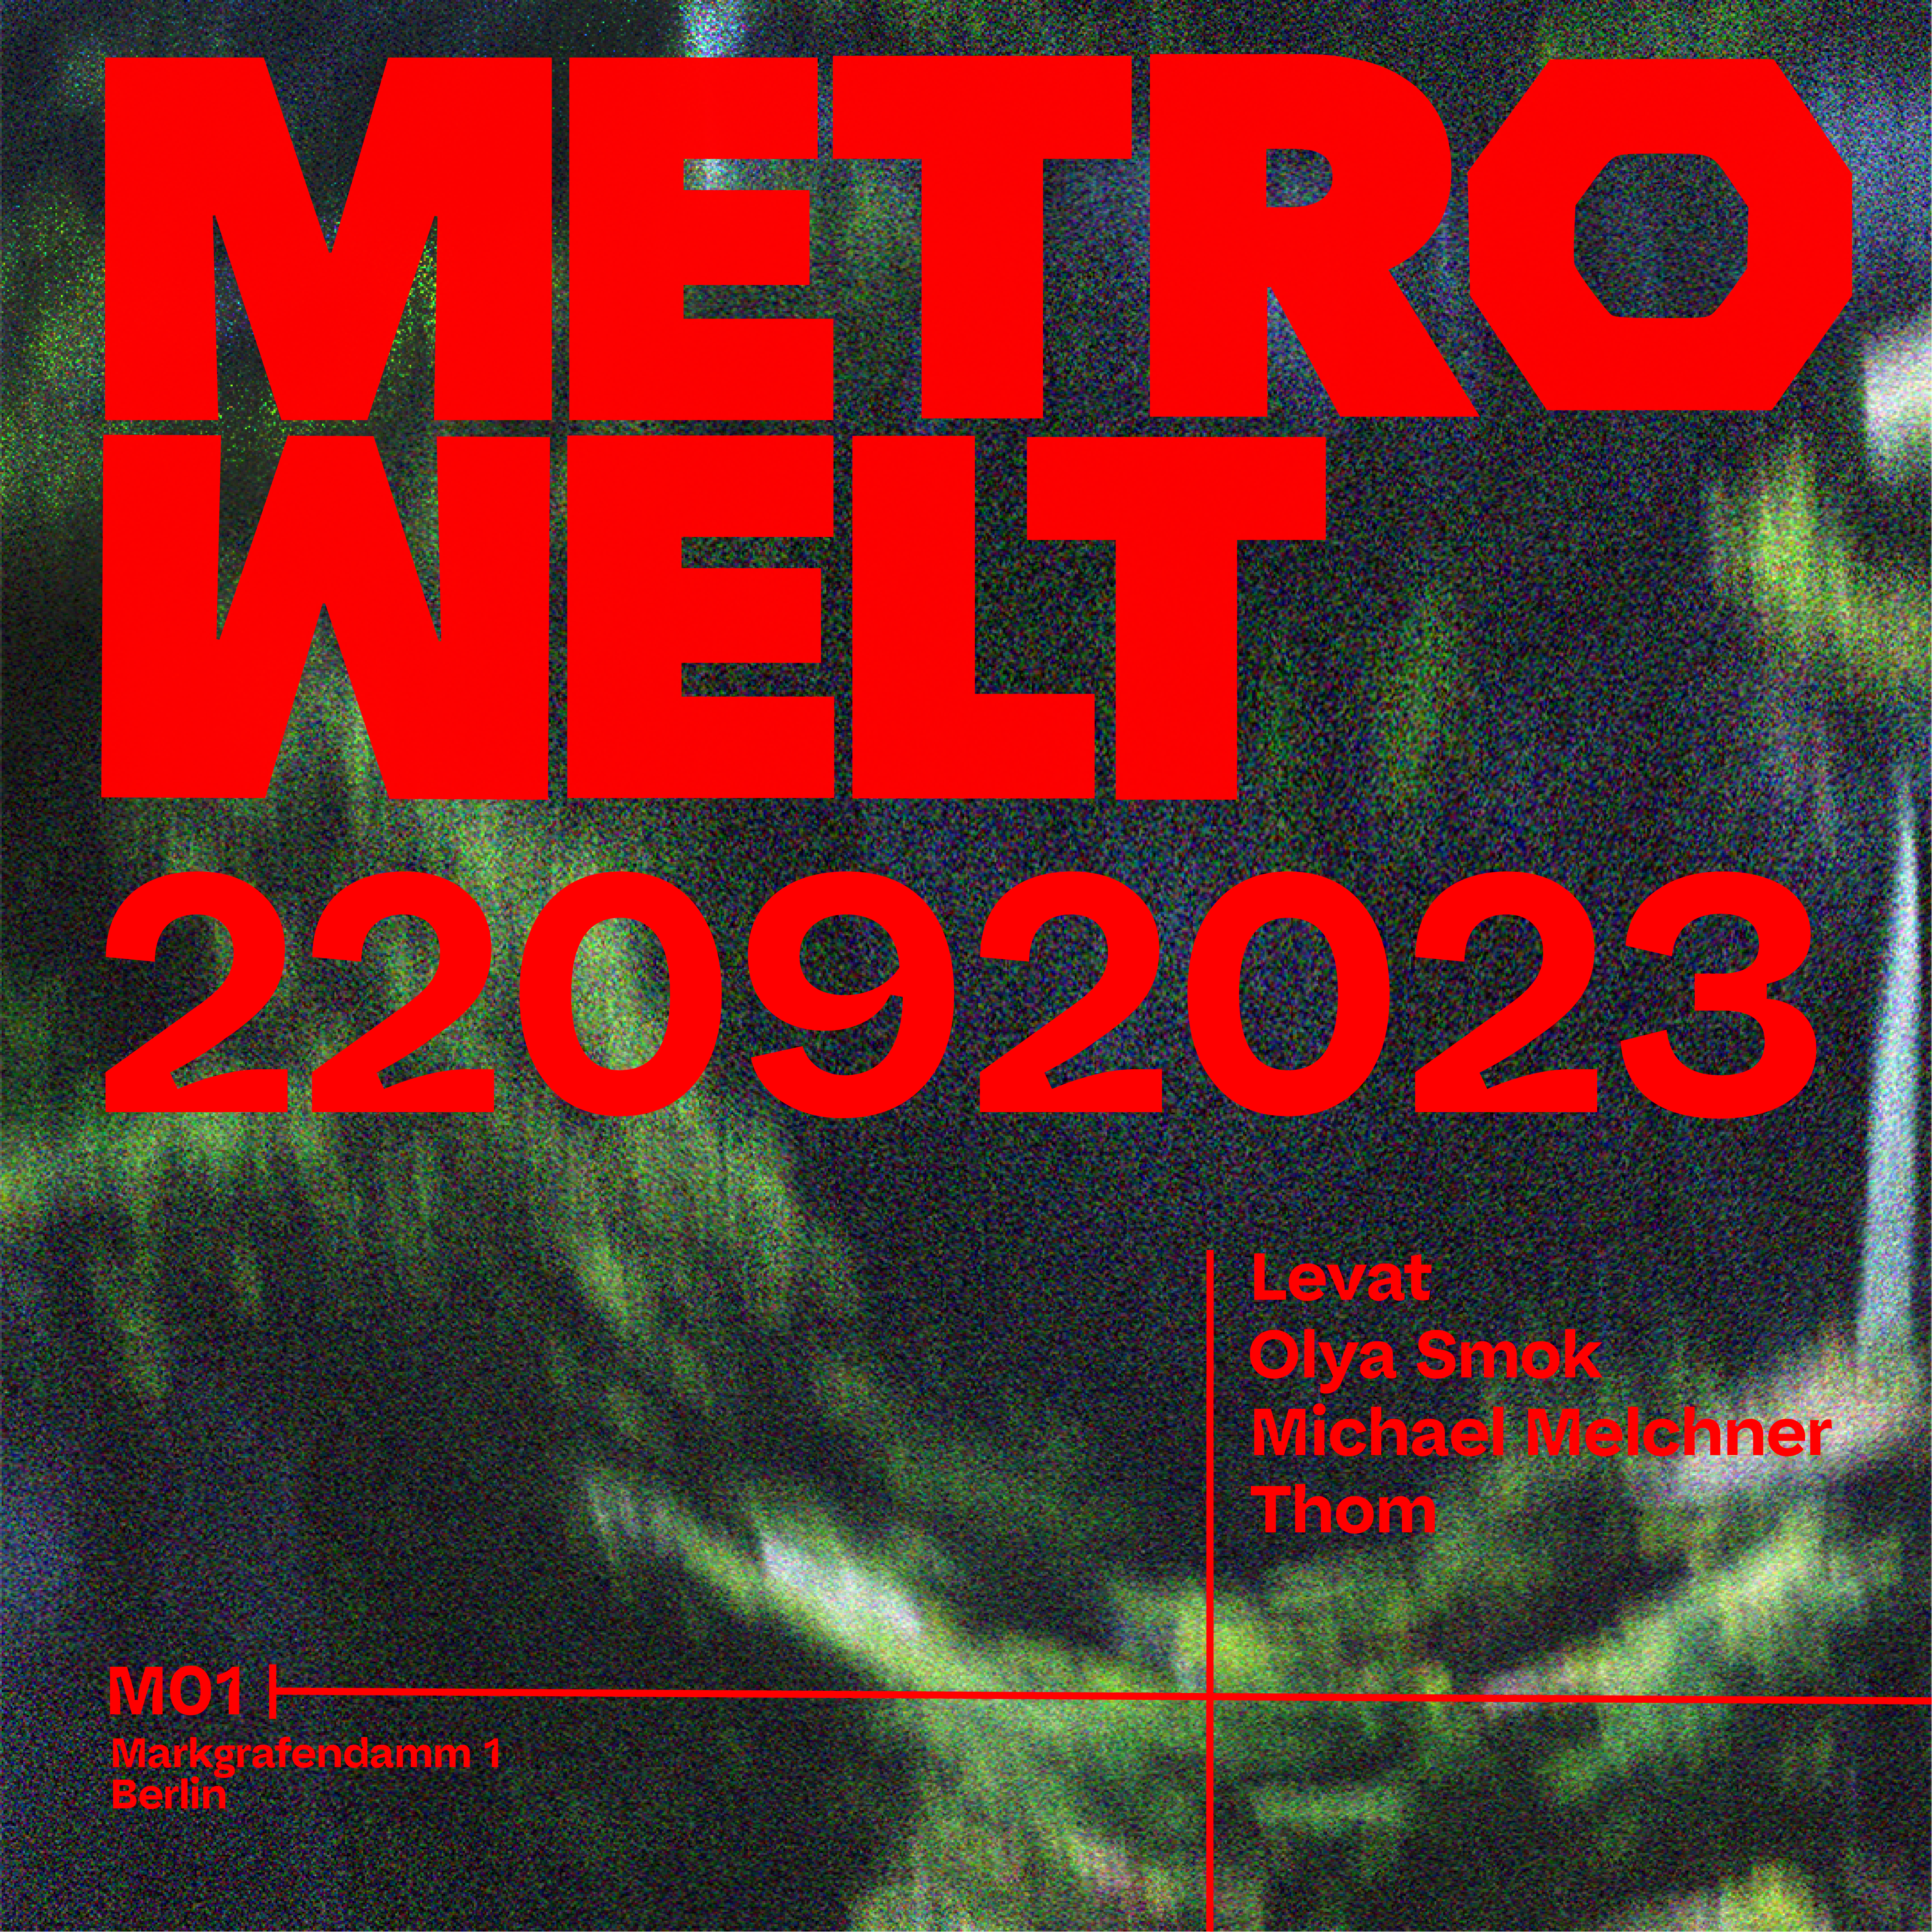 Metrowelt - Página trasera